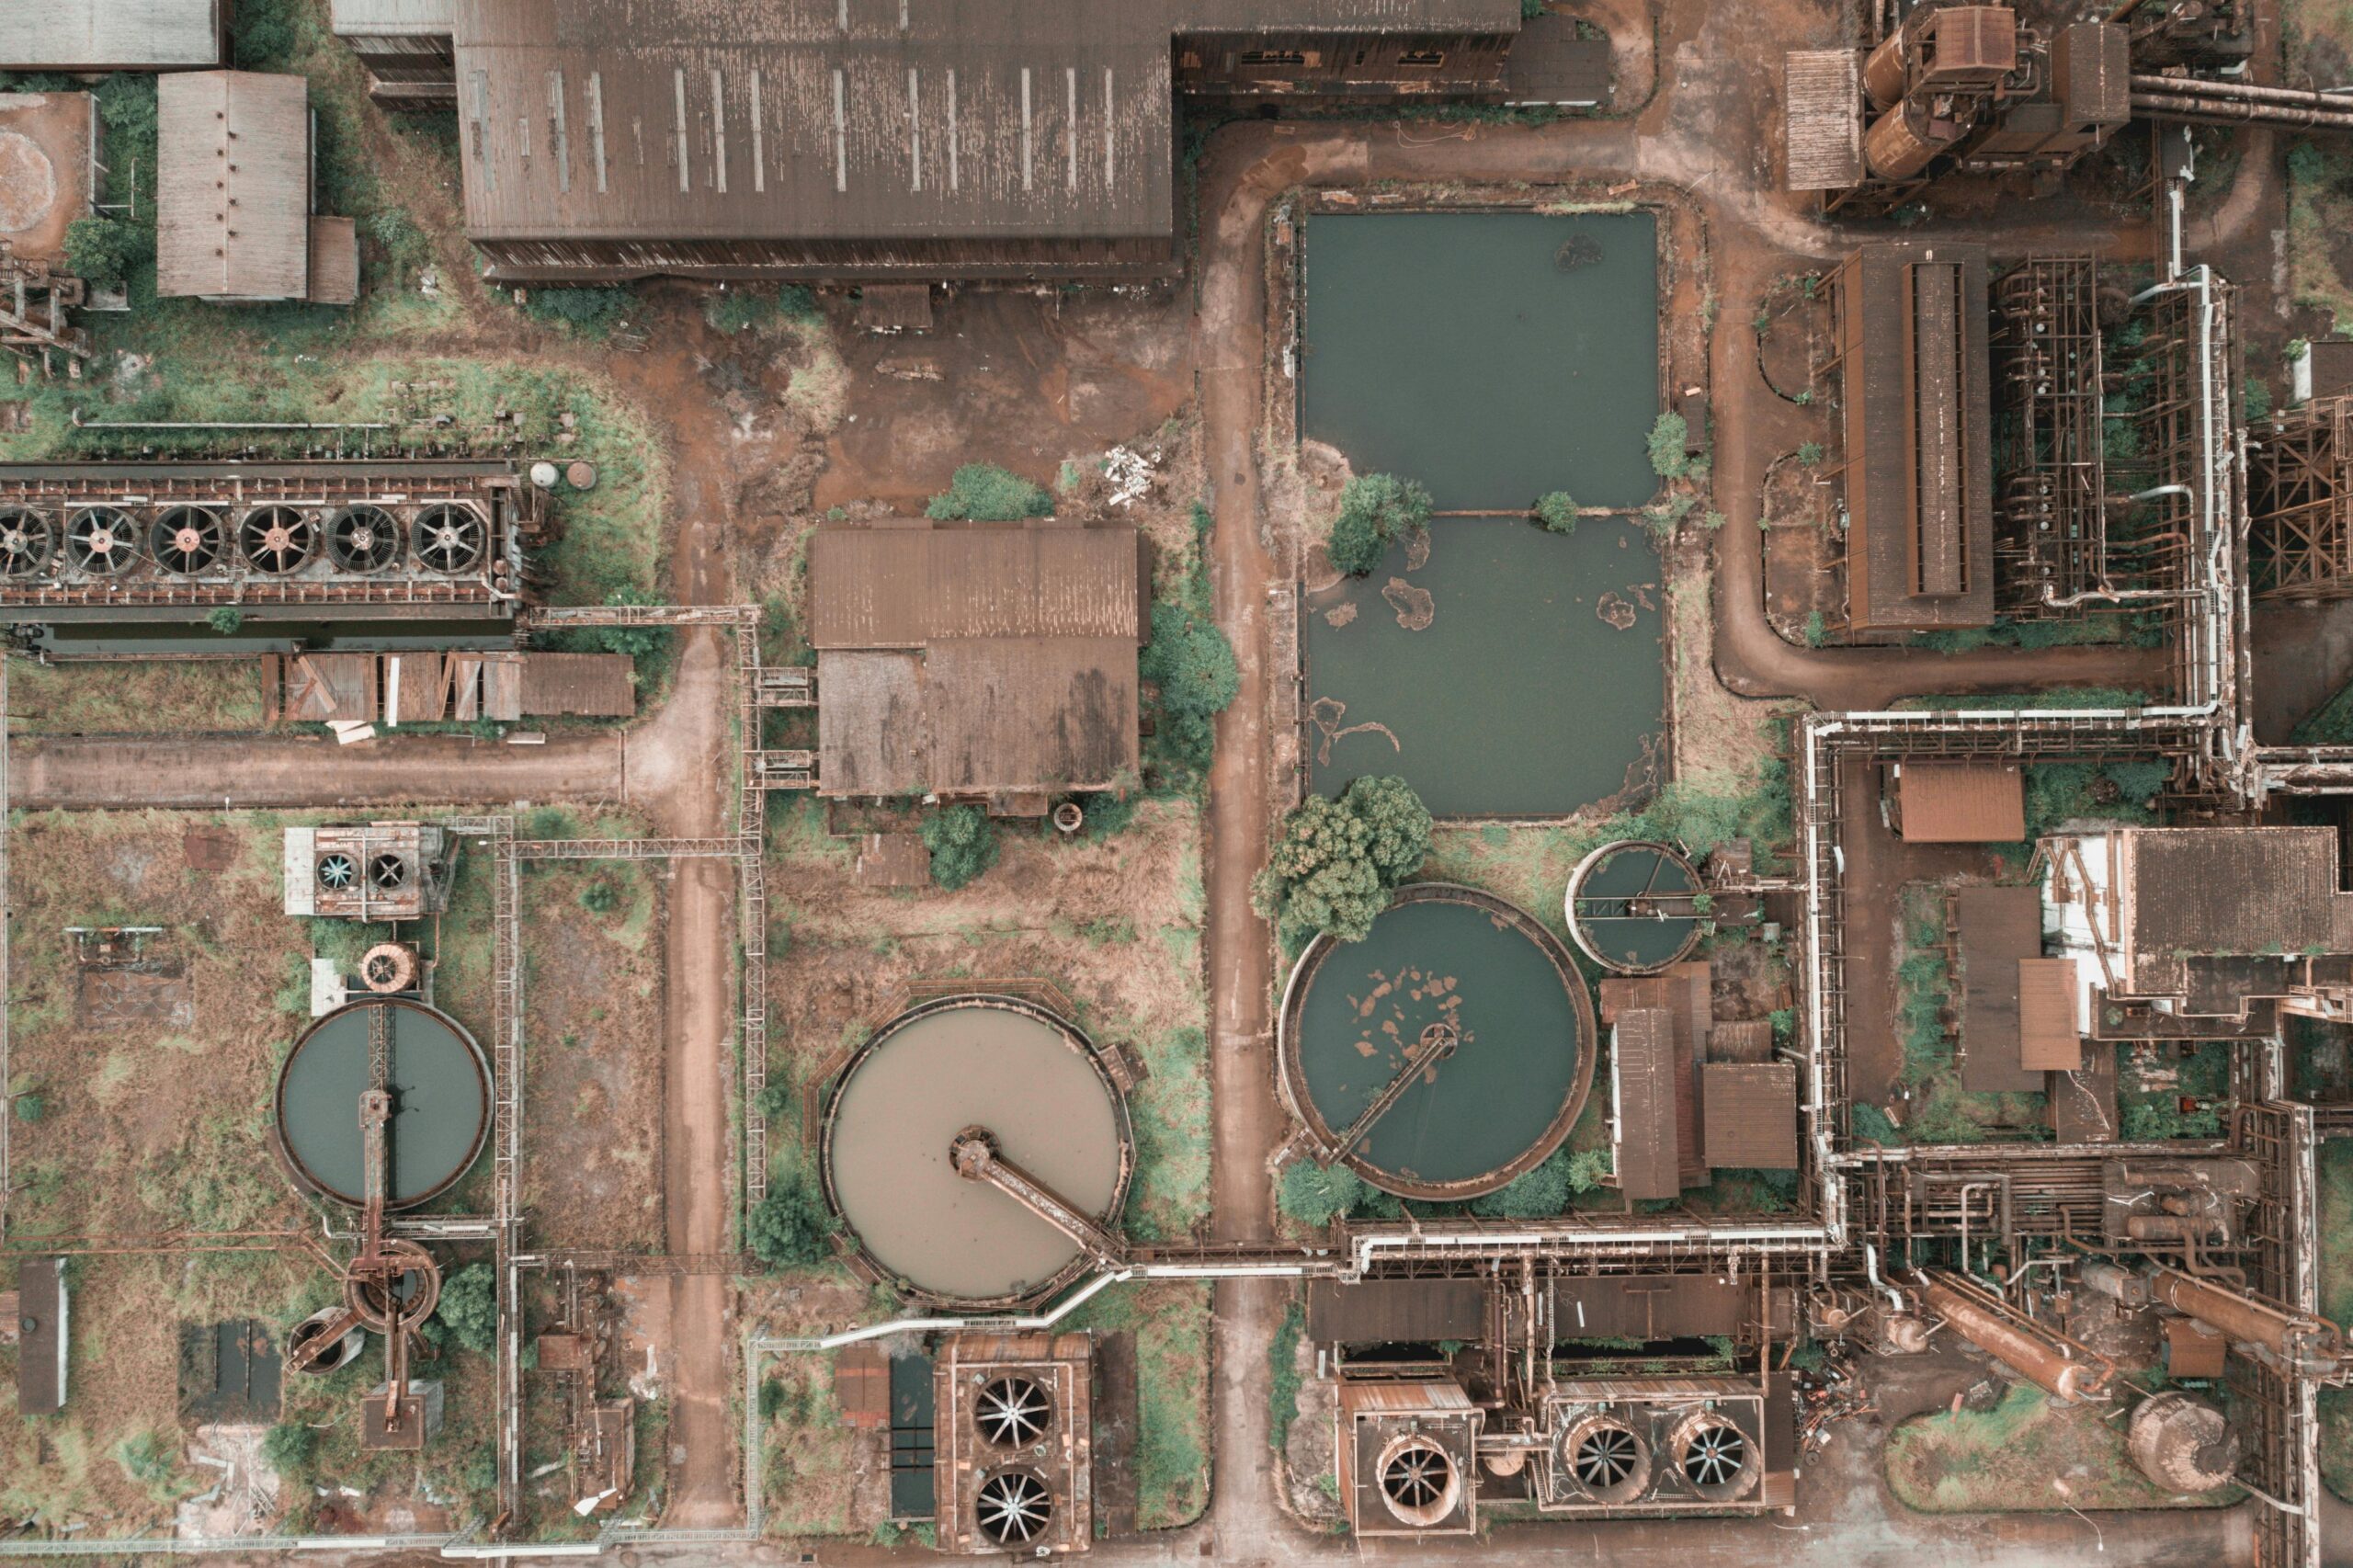 Sewage Treatment plant in uae